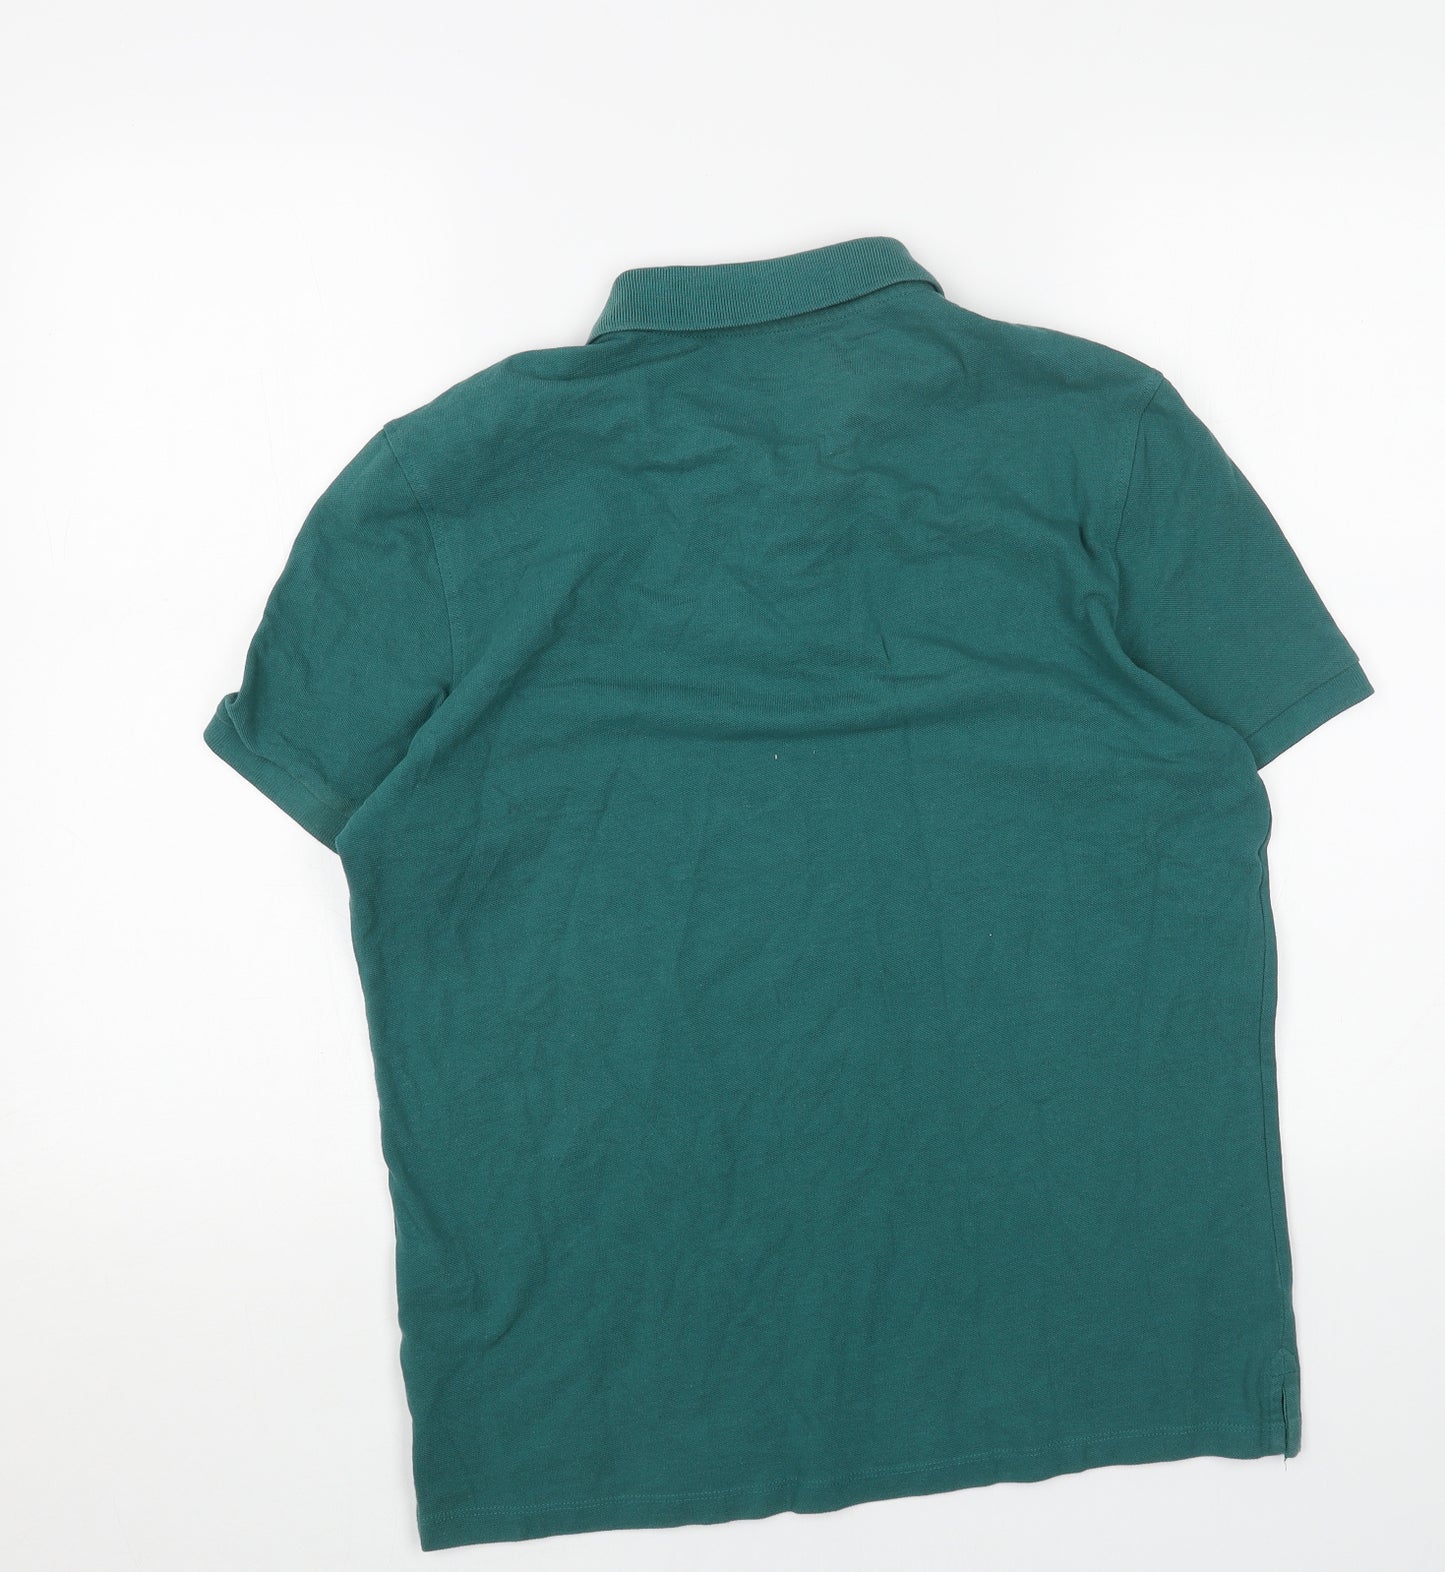 OVS Mens Green Cotton Polo Size M Collared Pullover